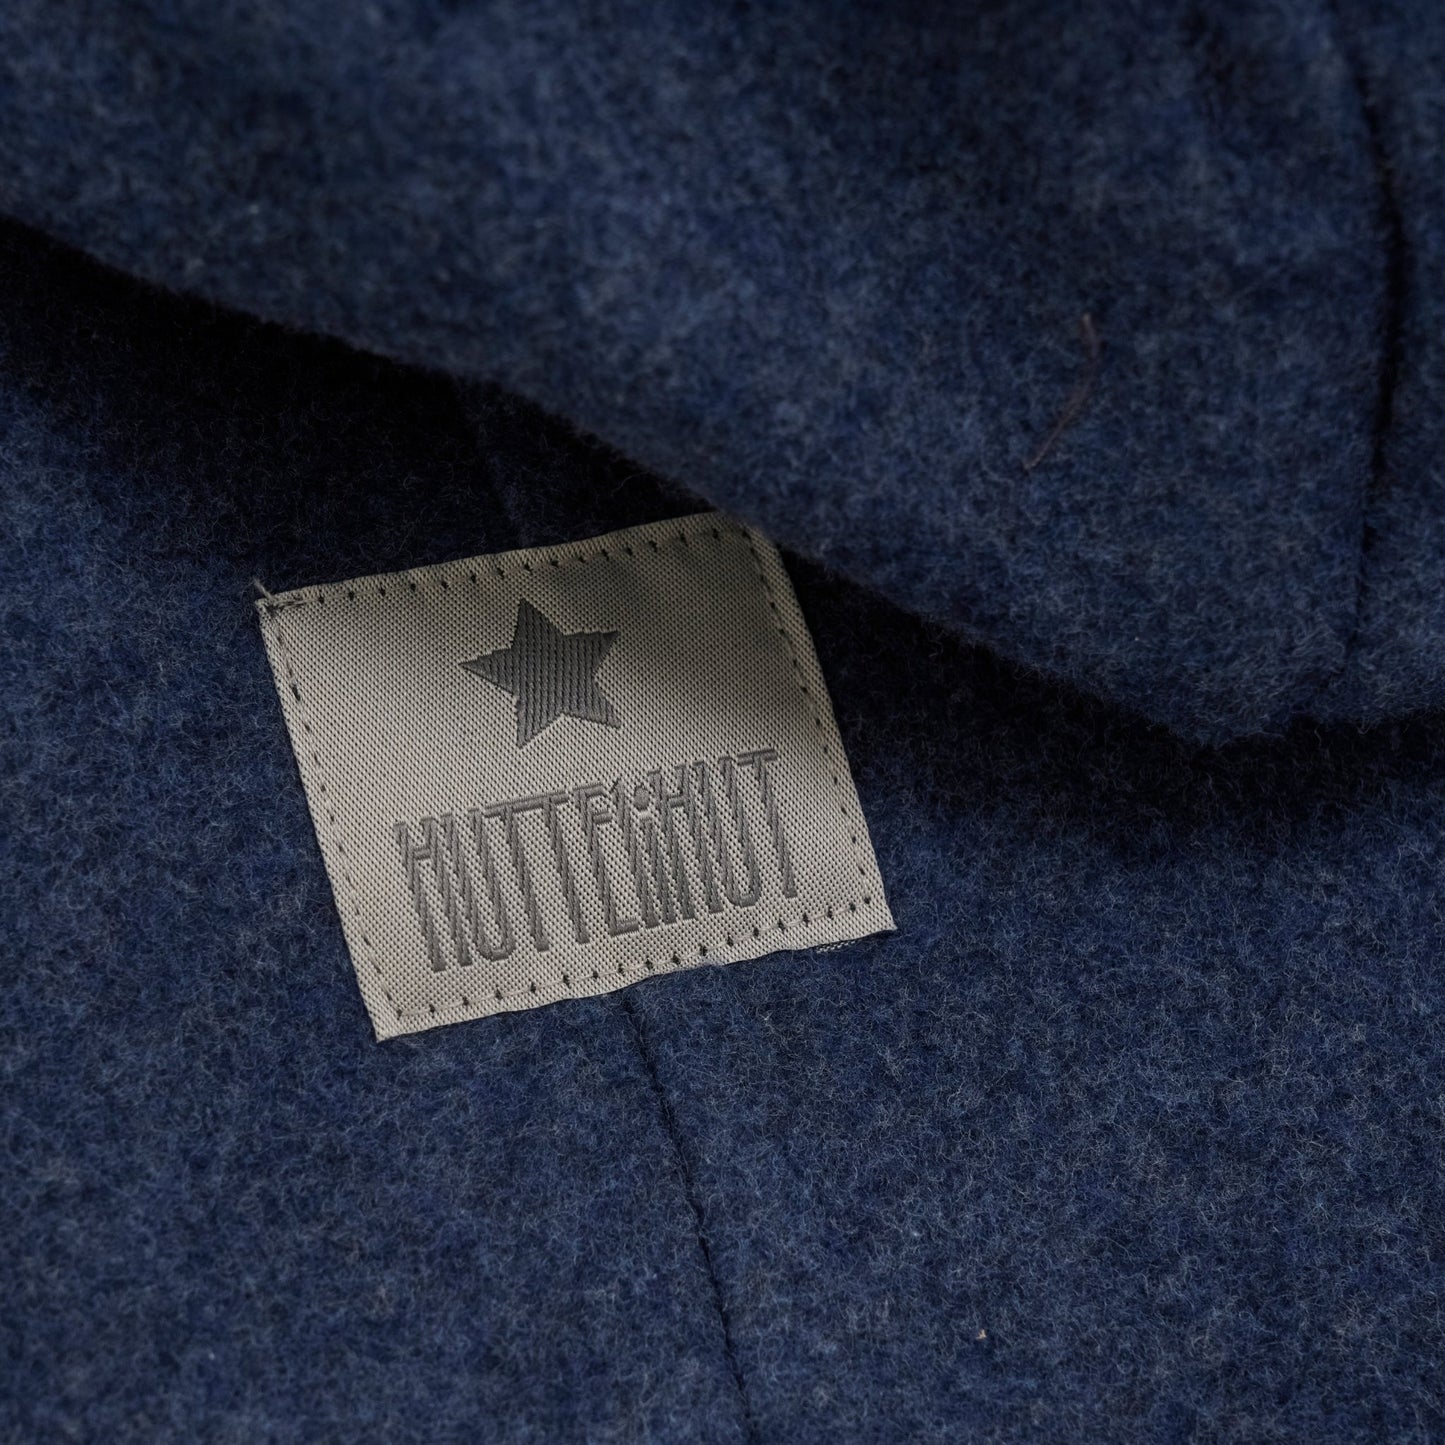 HUTTEliHUT - Pram Suit Ears Cot. Fleece (M) Color:7790 Navy Melange